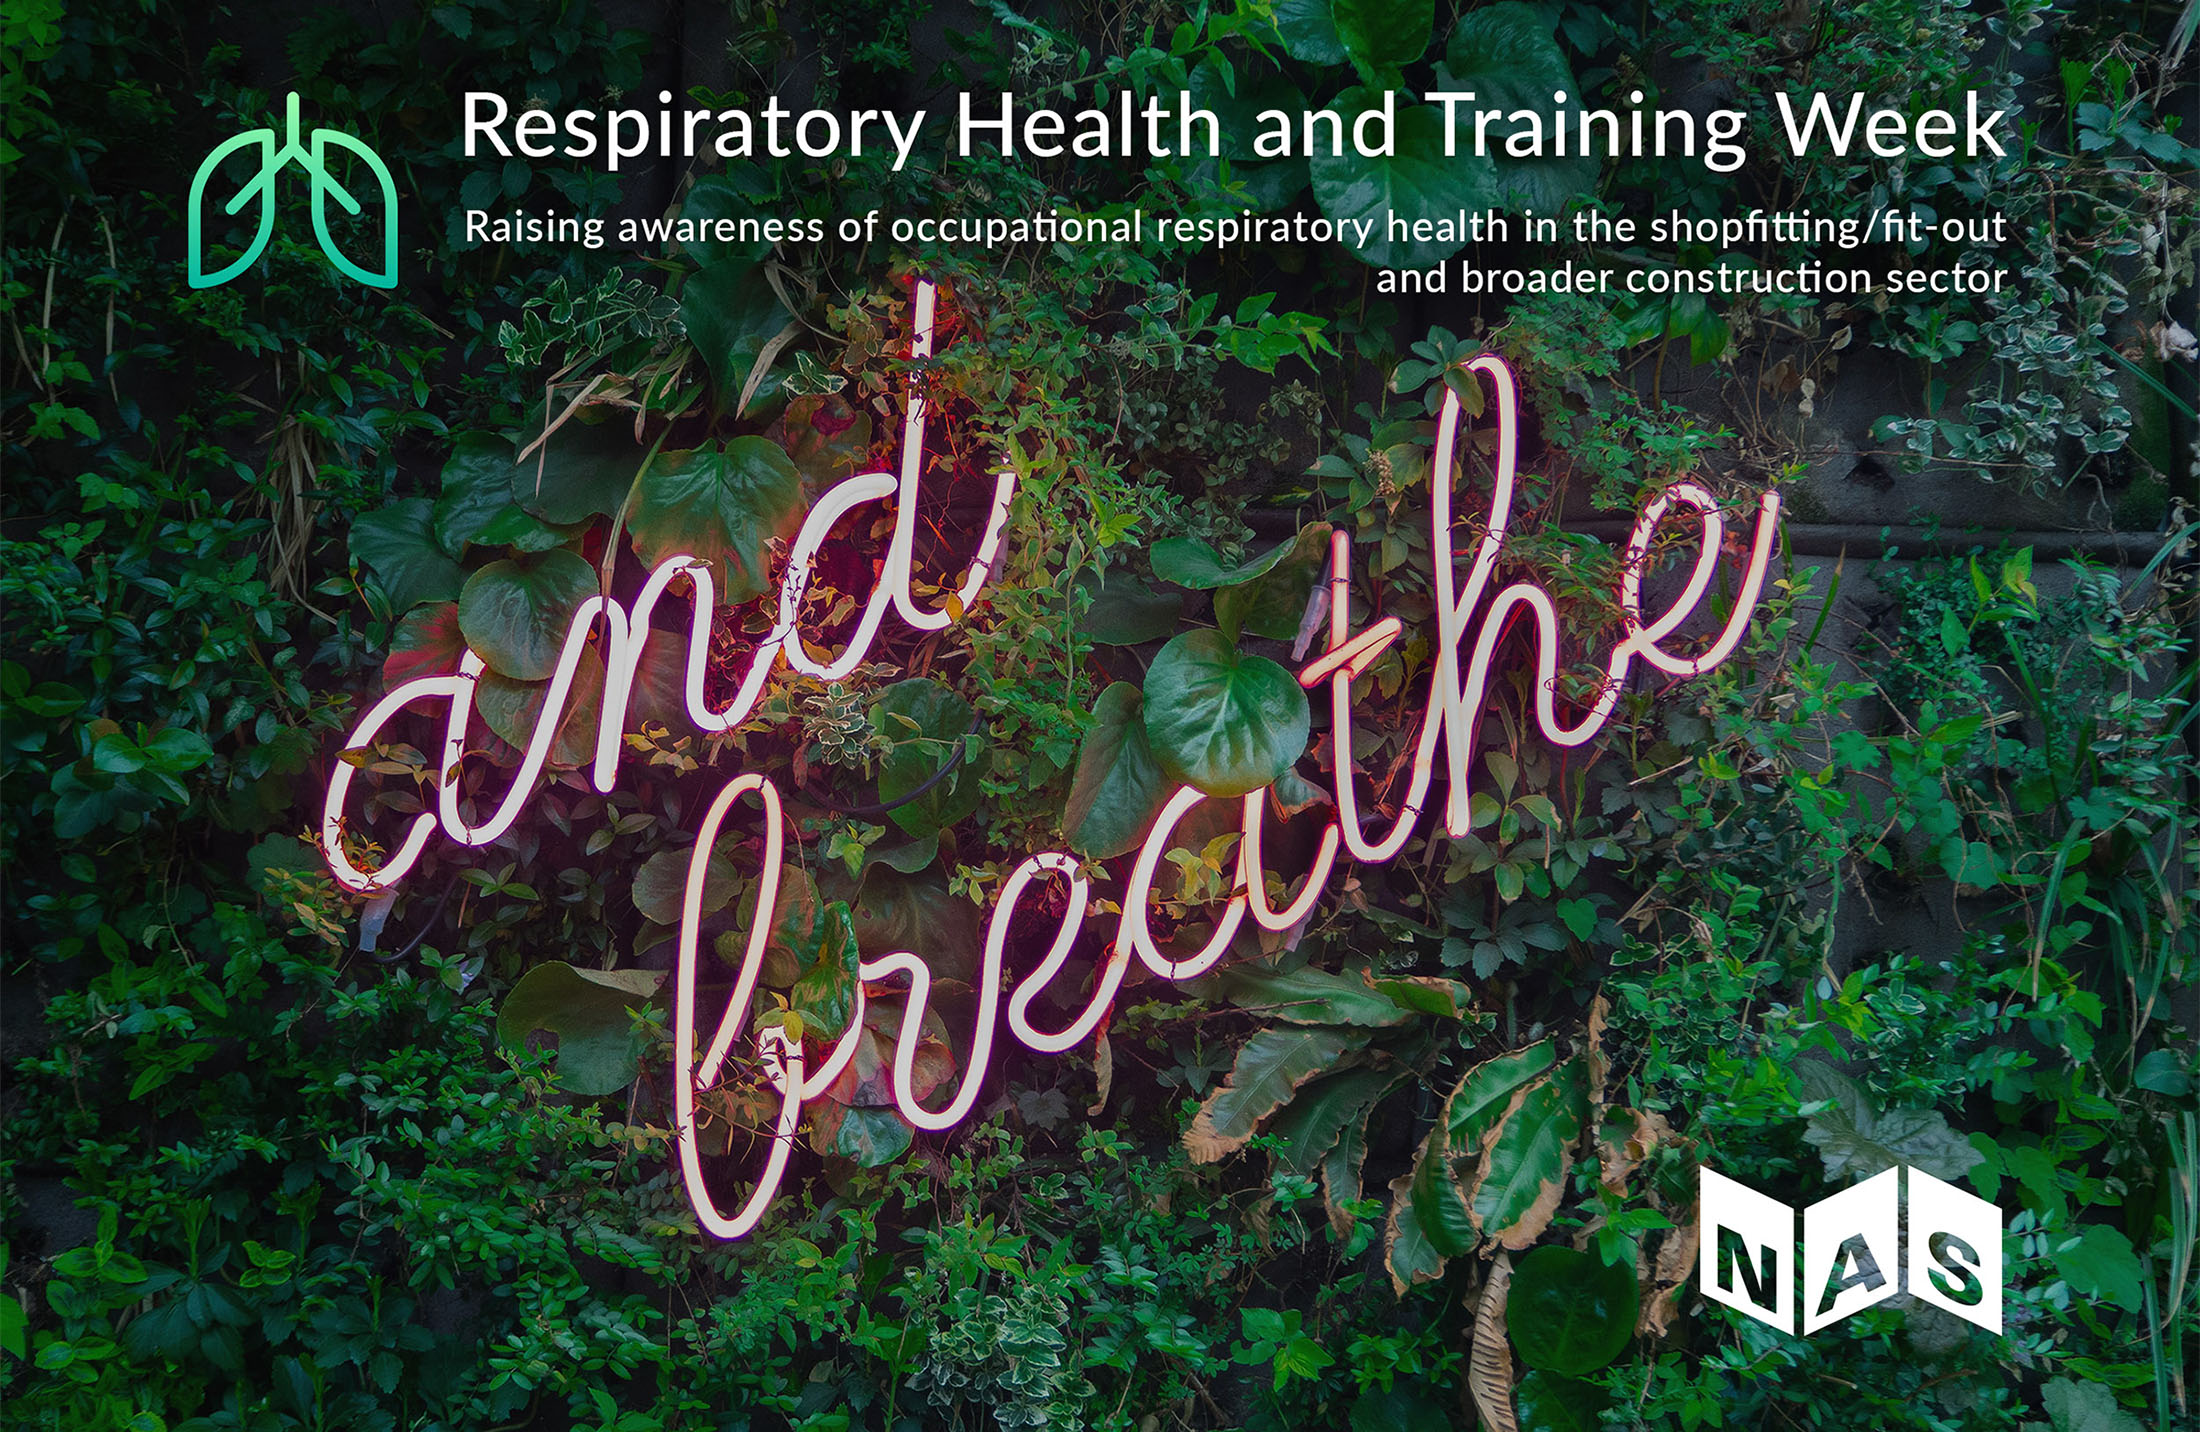 Respiratory Health and Training Week 2021